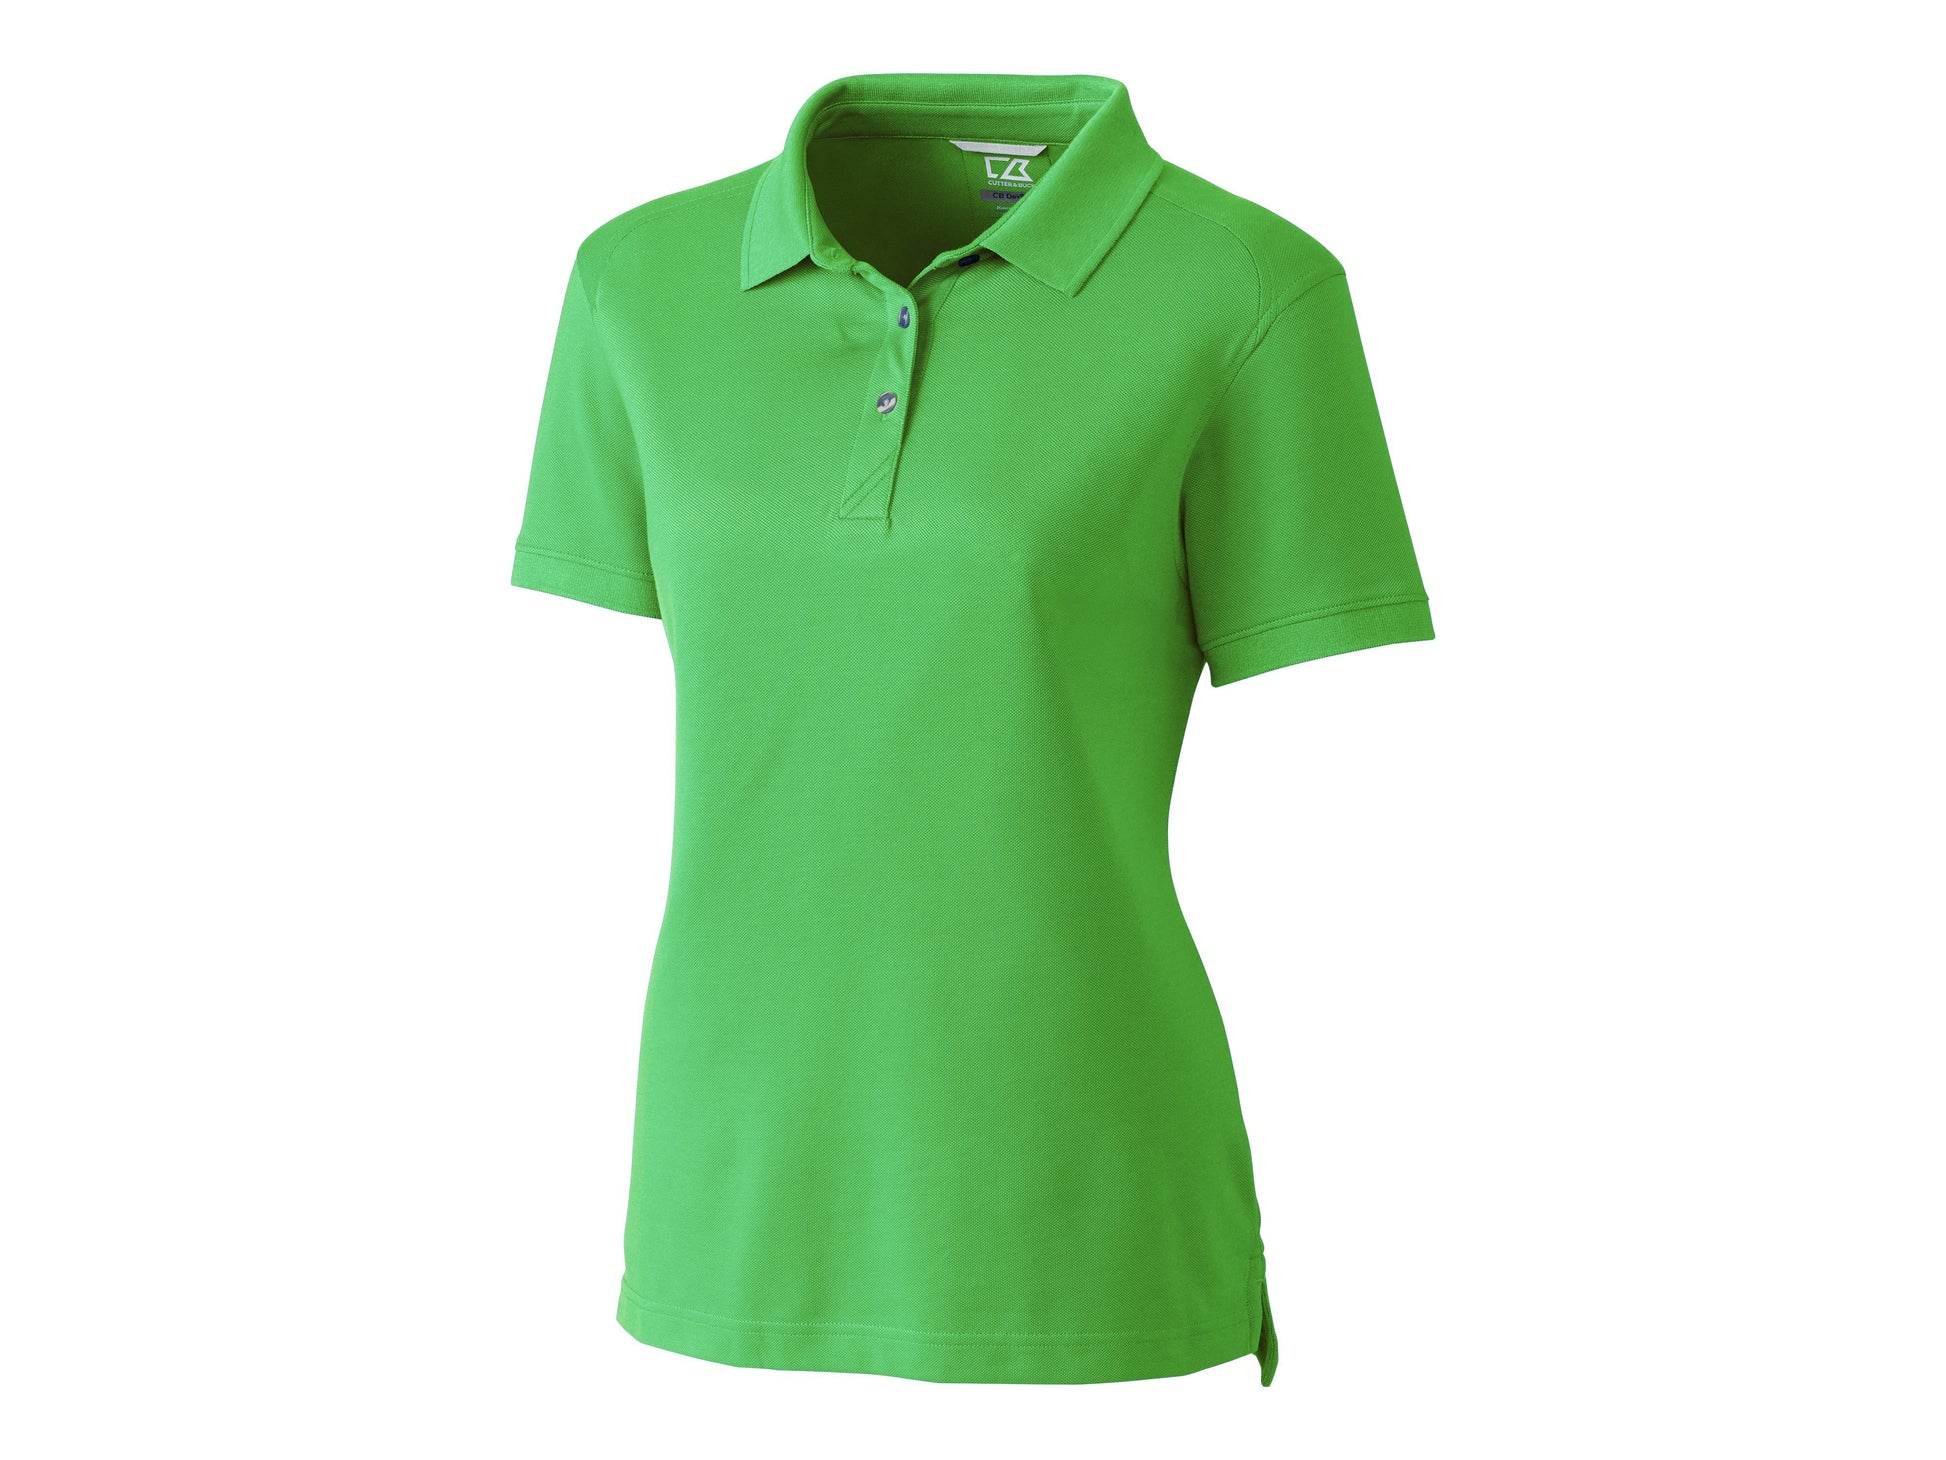 Cutter and Buck Shirts Advantage Polo (Women's Cut) - LCK08685 - Cilantro